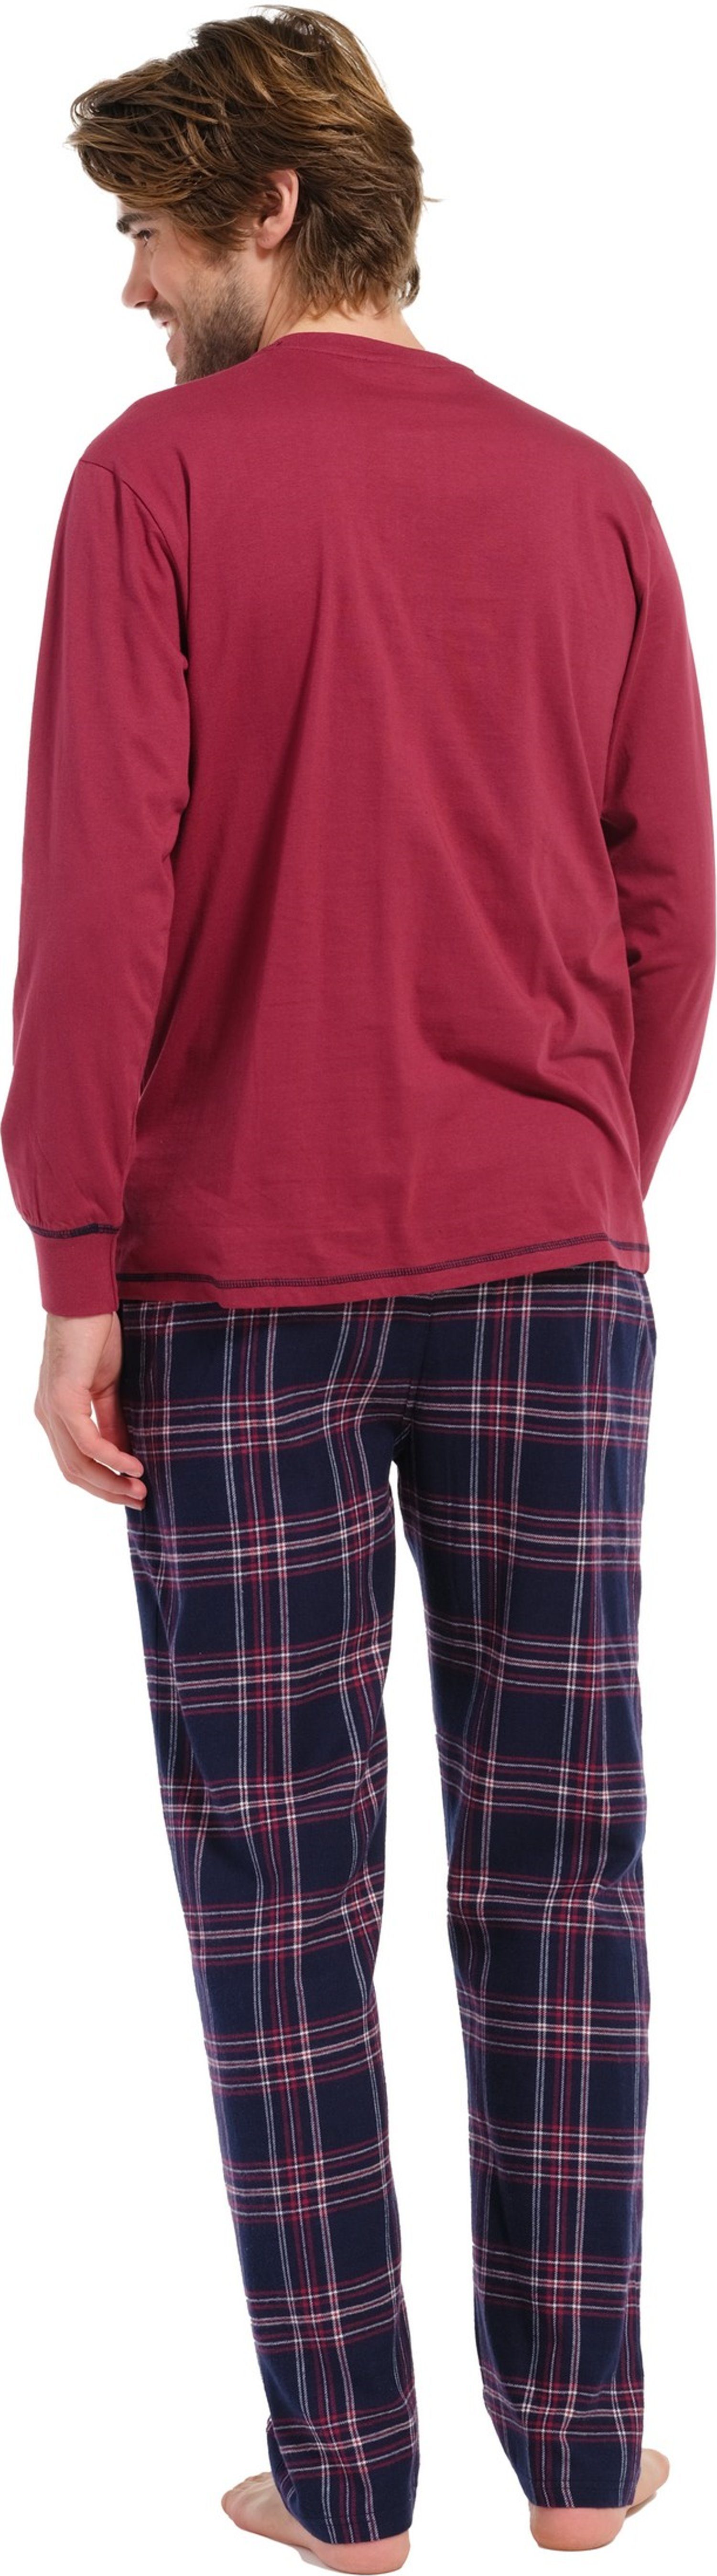 tlg) Pastunette Pyjama (2 Schlafanzug Baumwolle Herren